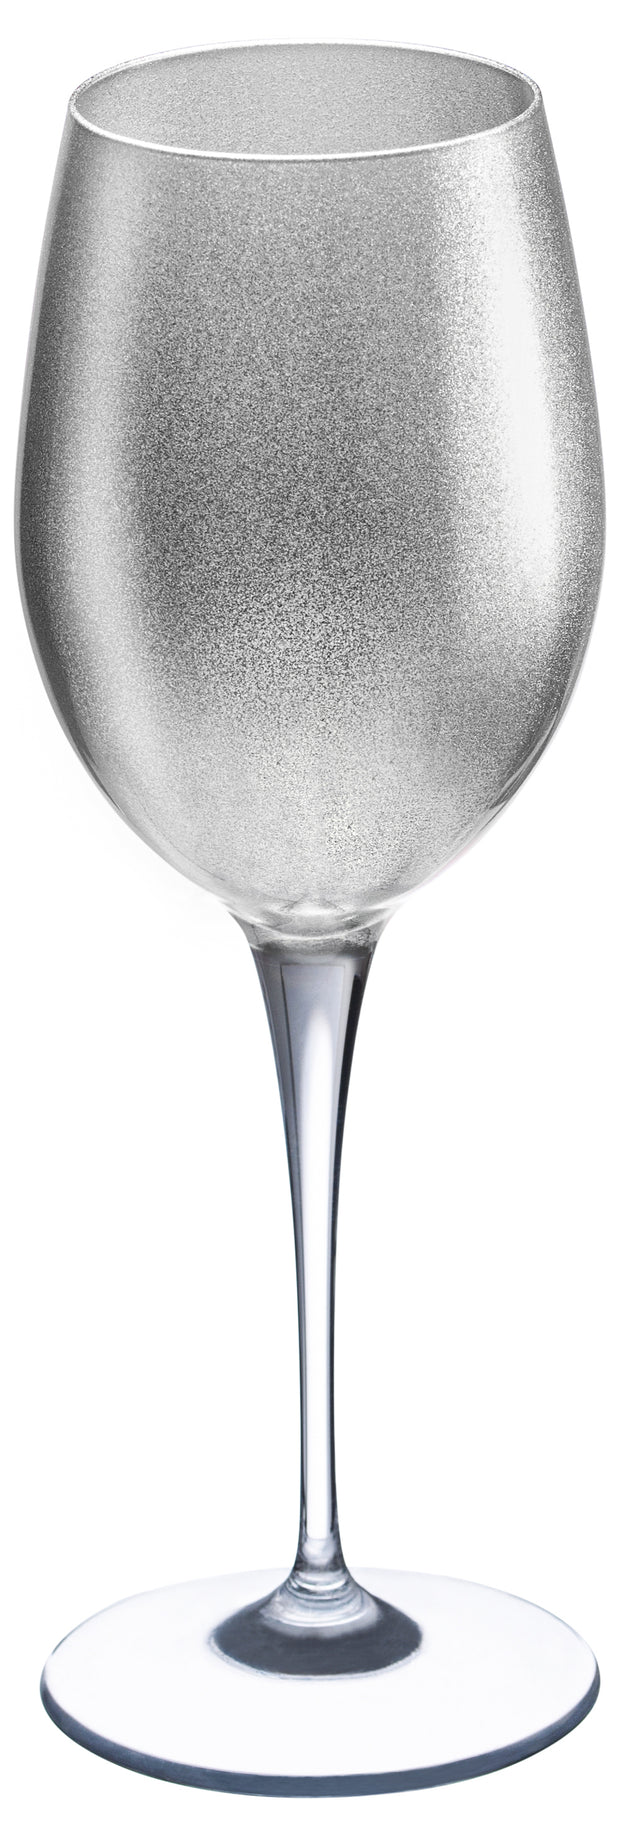 Opaque White Wine Glass Silver, 14 oz. Set of 6